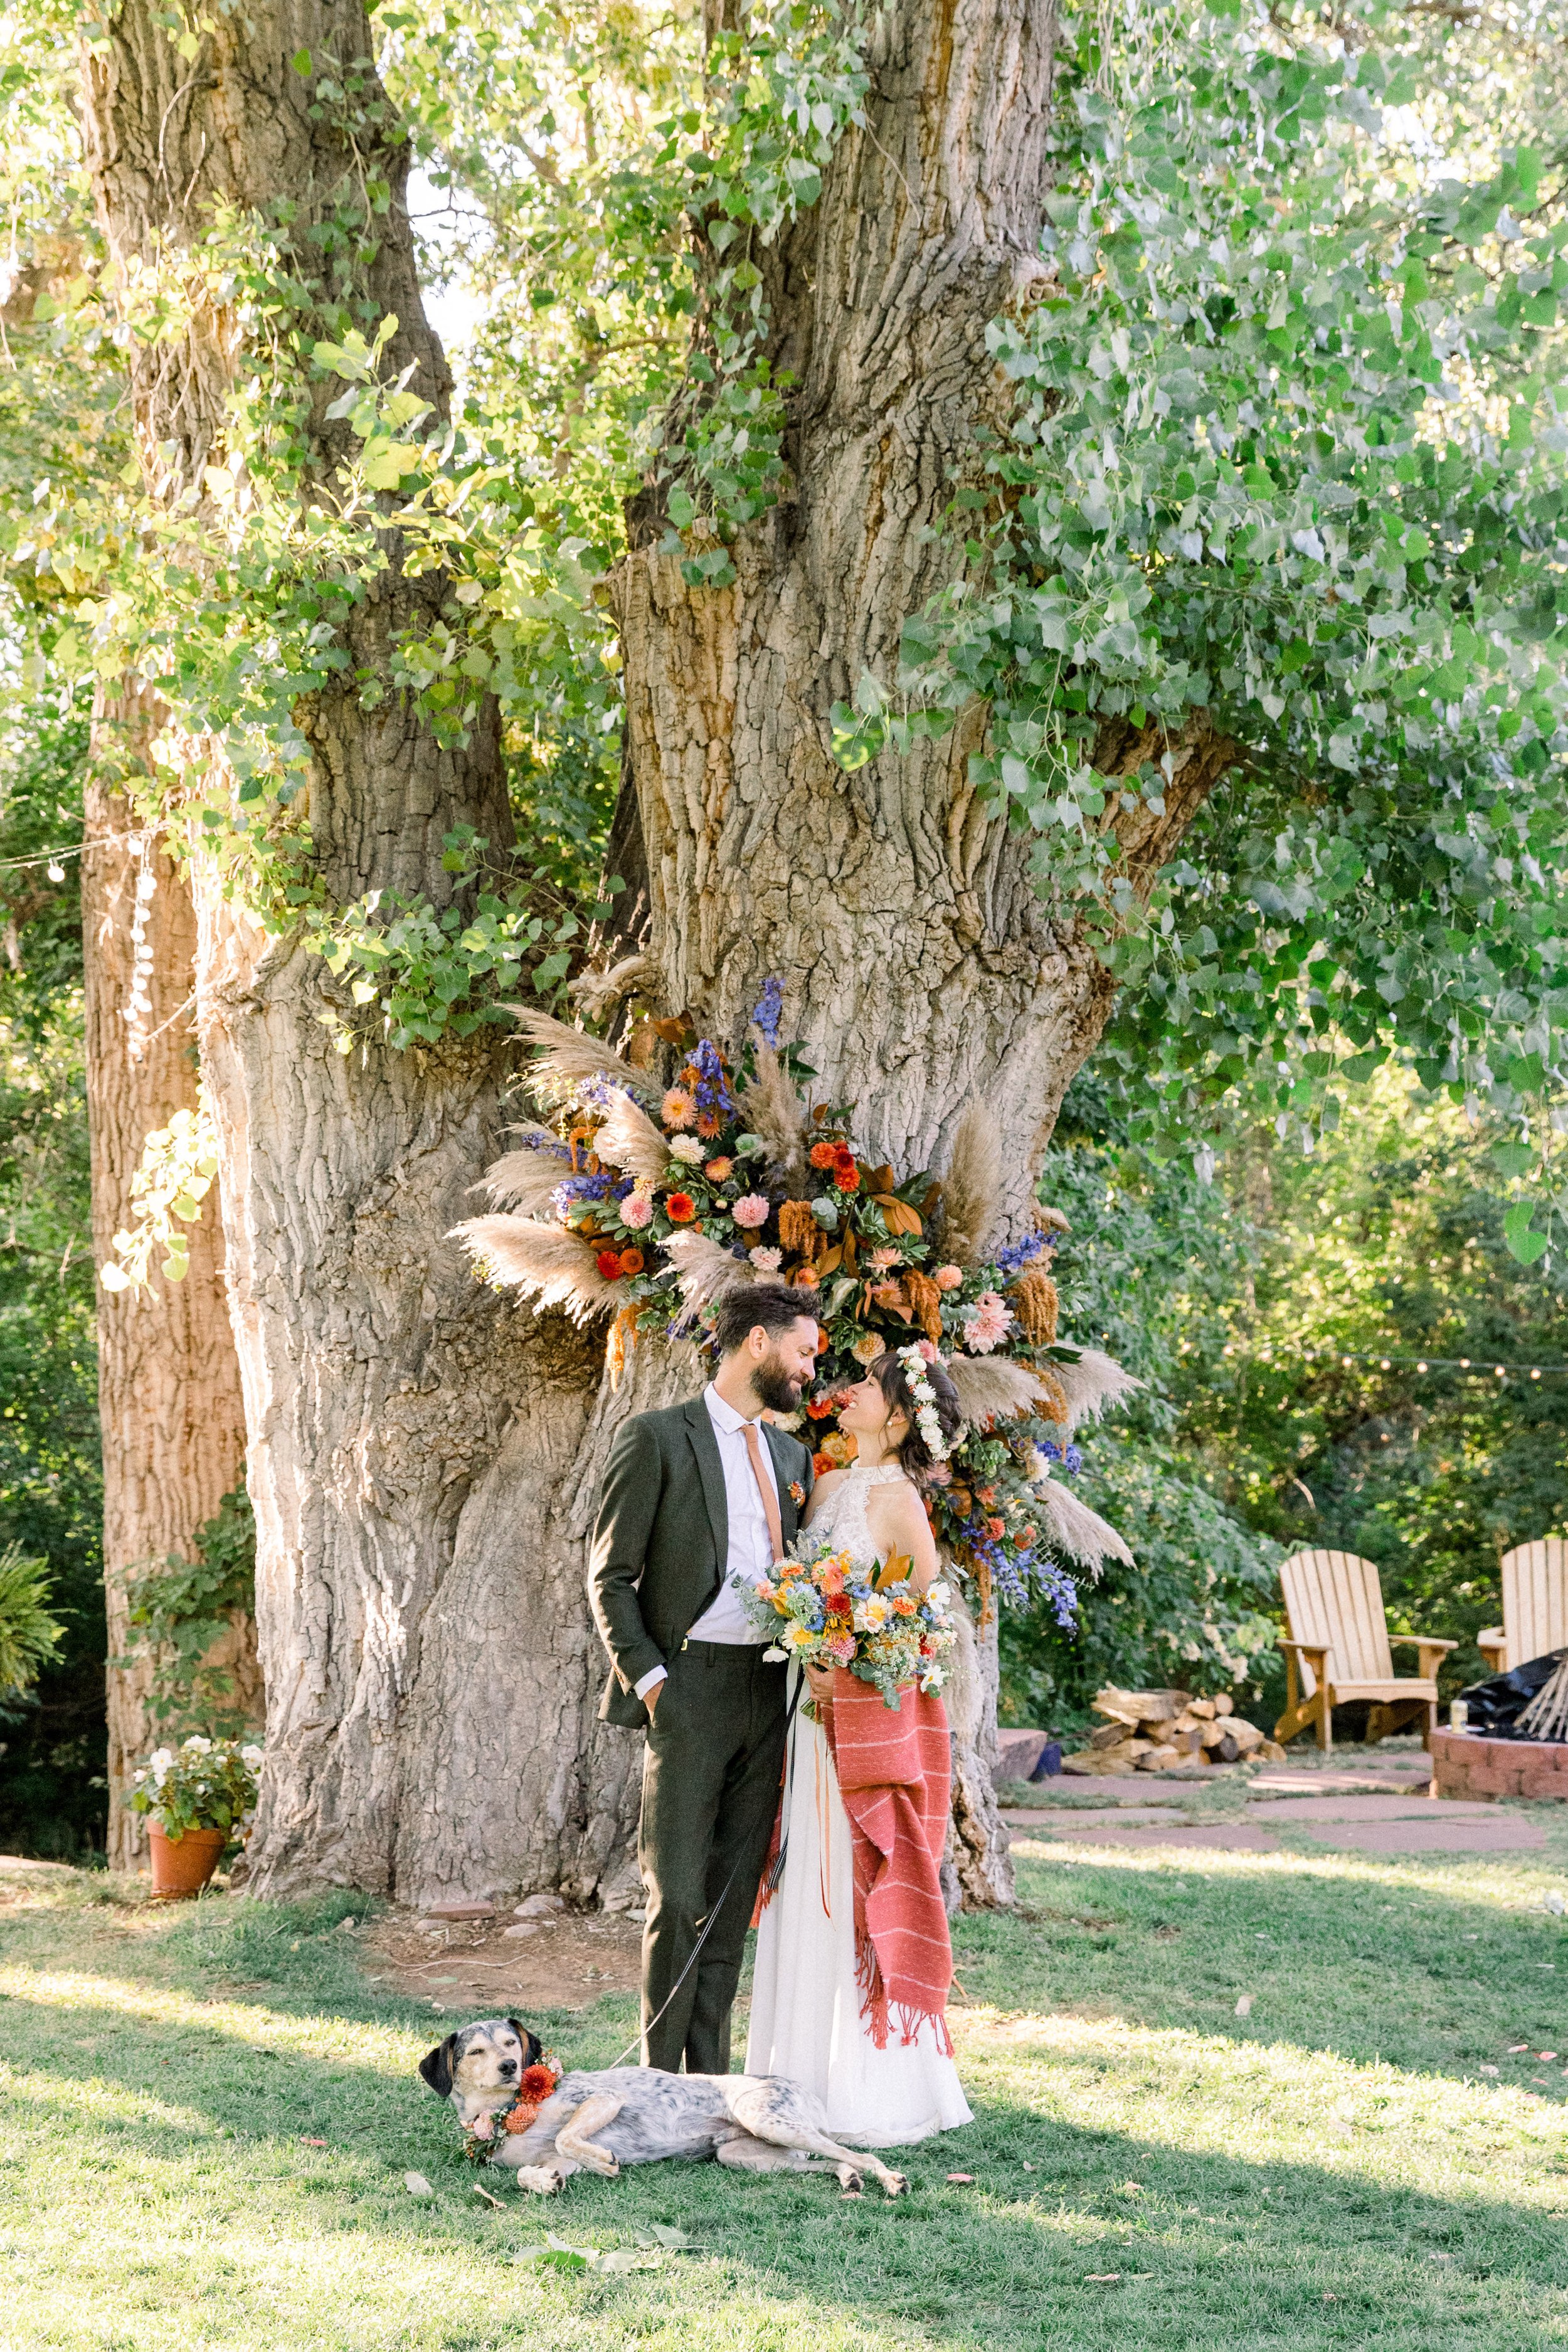 Plume&Furrow-Weddinf-Florist-Taylor&Ryan-ChelseaSliwaPhotography-Lyons-Farmette-September-Colorado-Bride-Groom-Best-Dog-Tree-Wrap.jpg